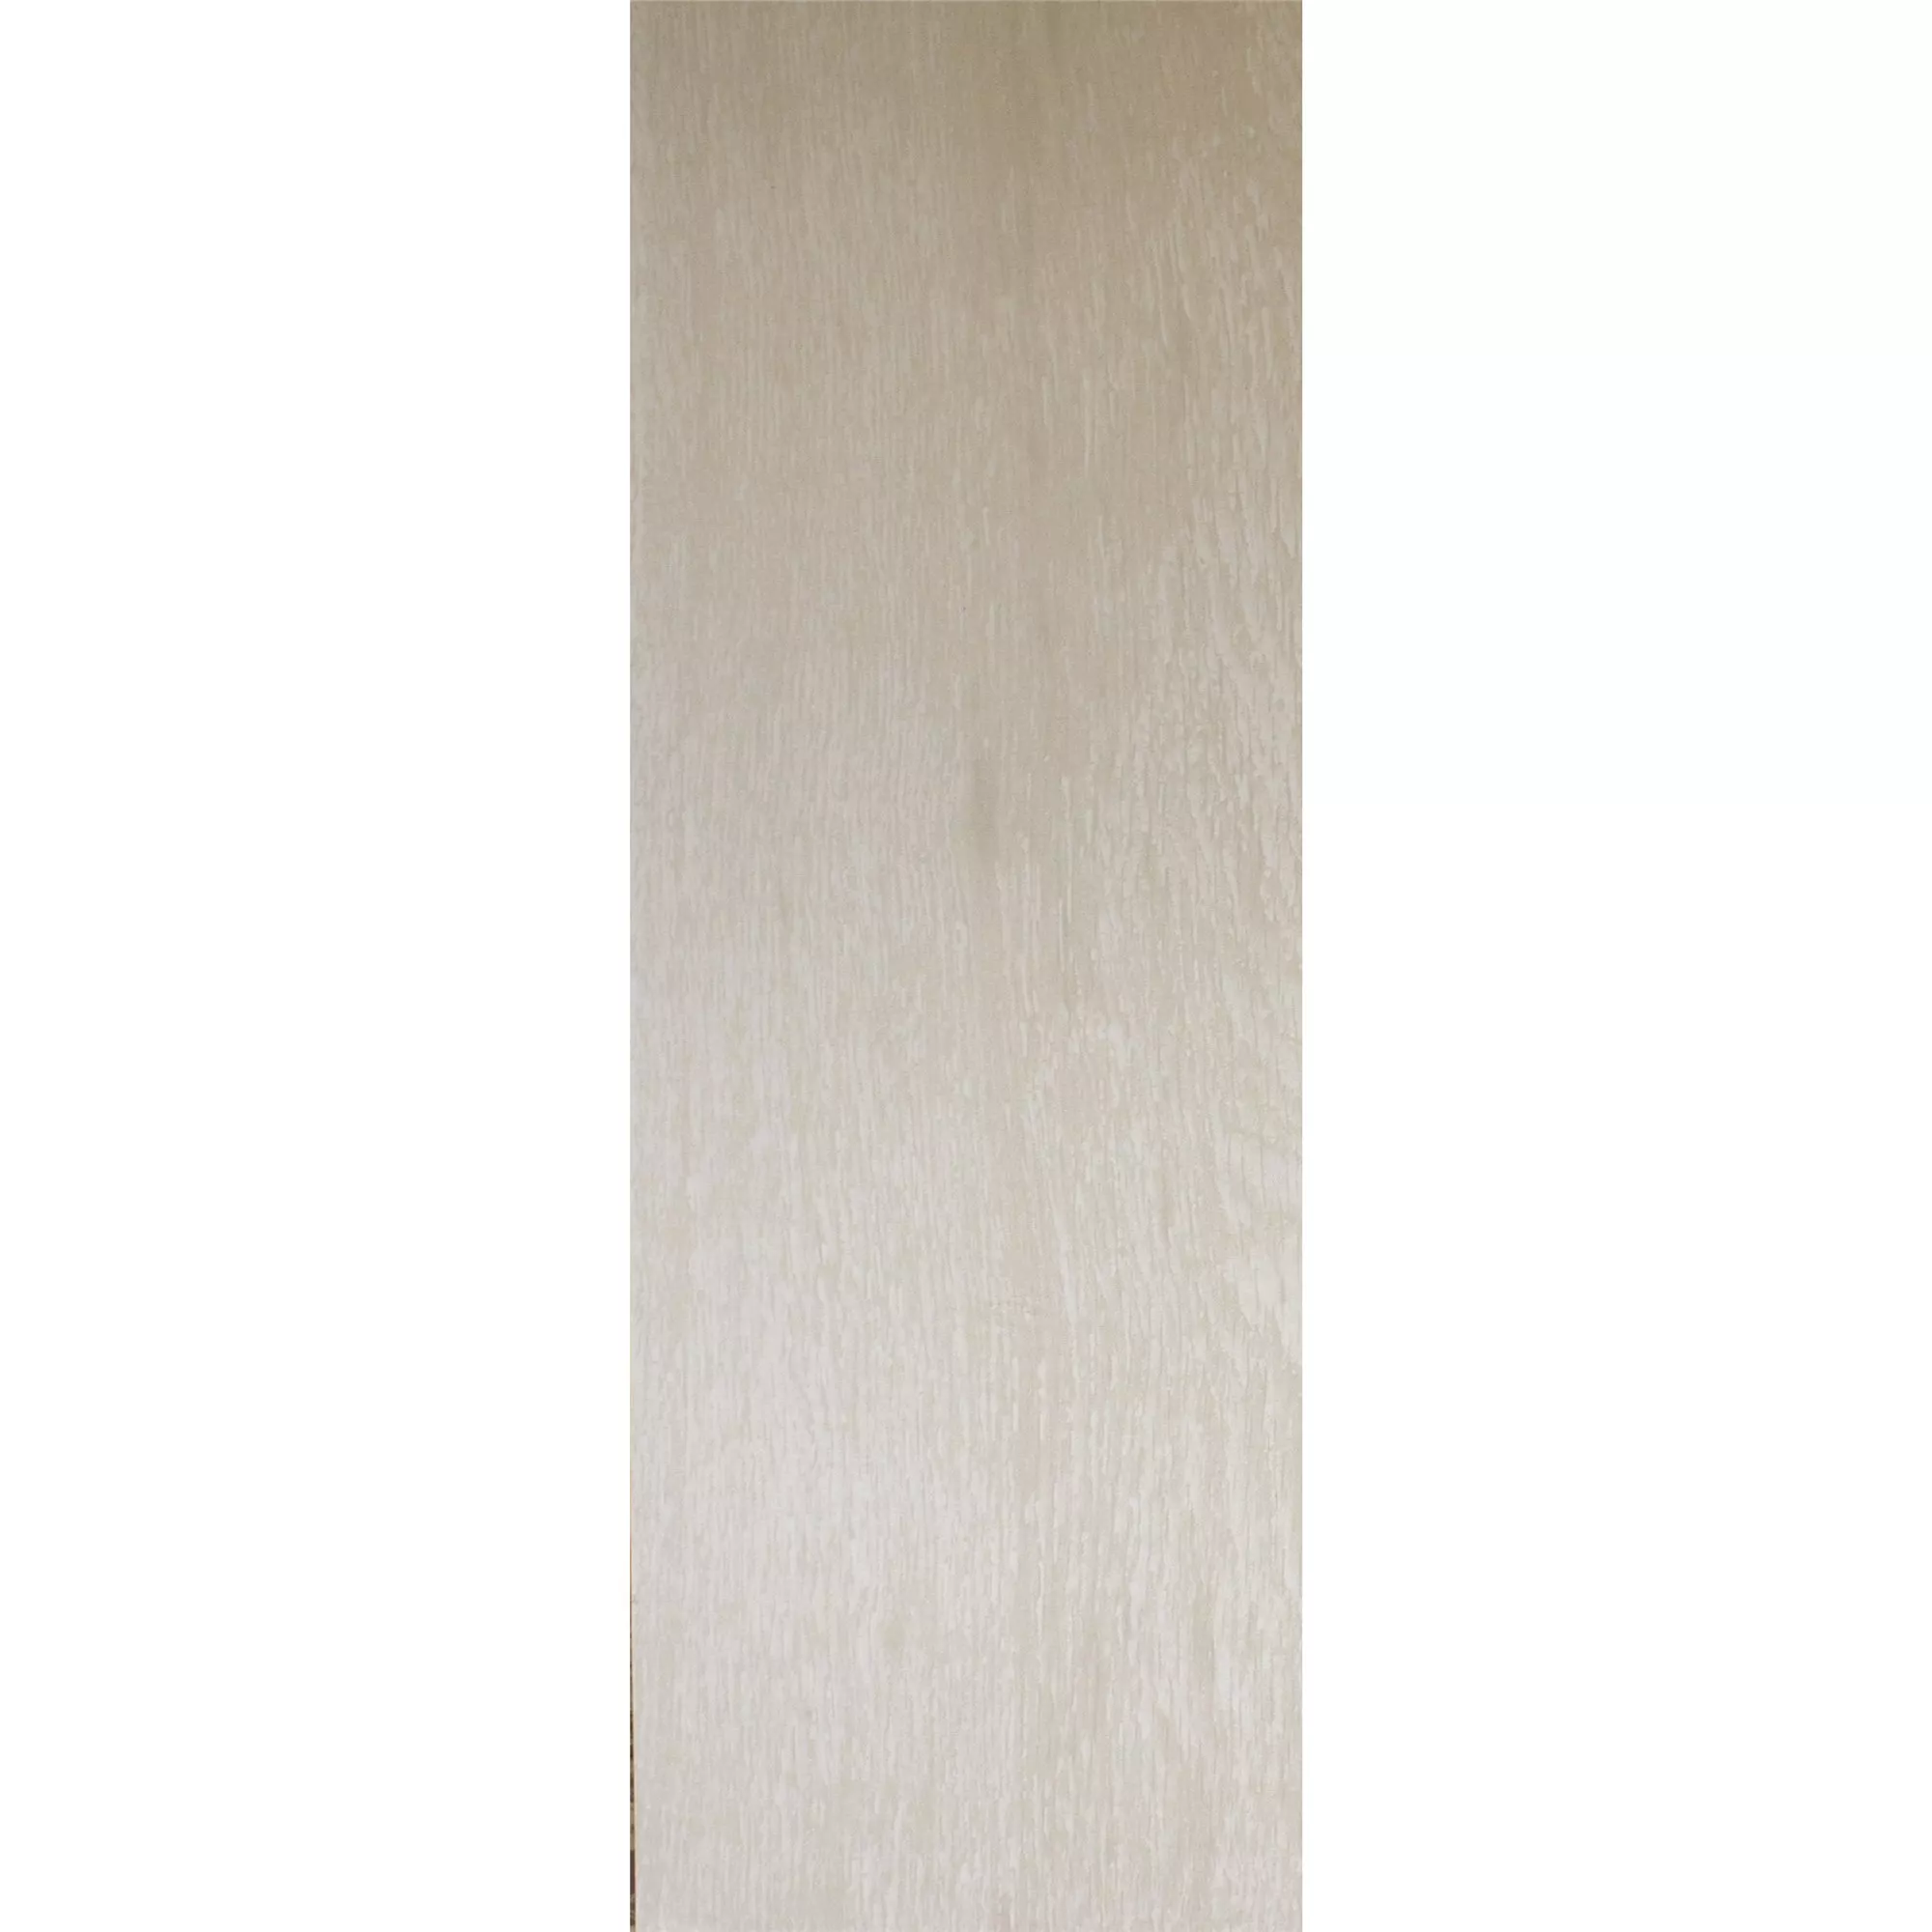 Piastrelle Herakles Legno Ottica White 20x120cm